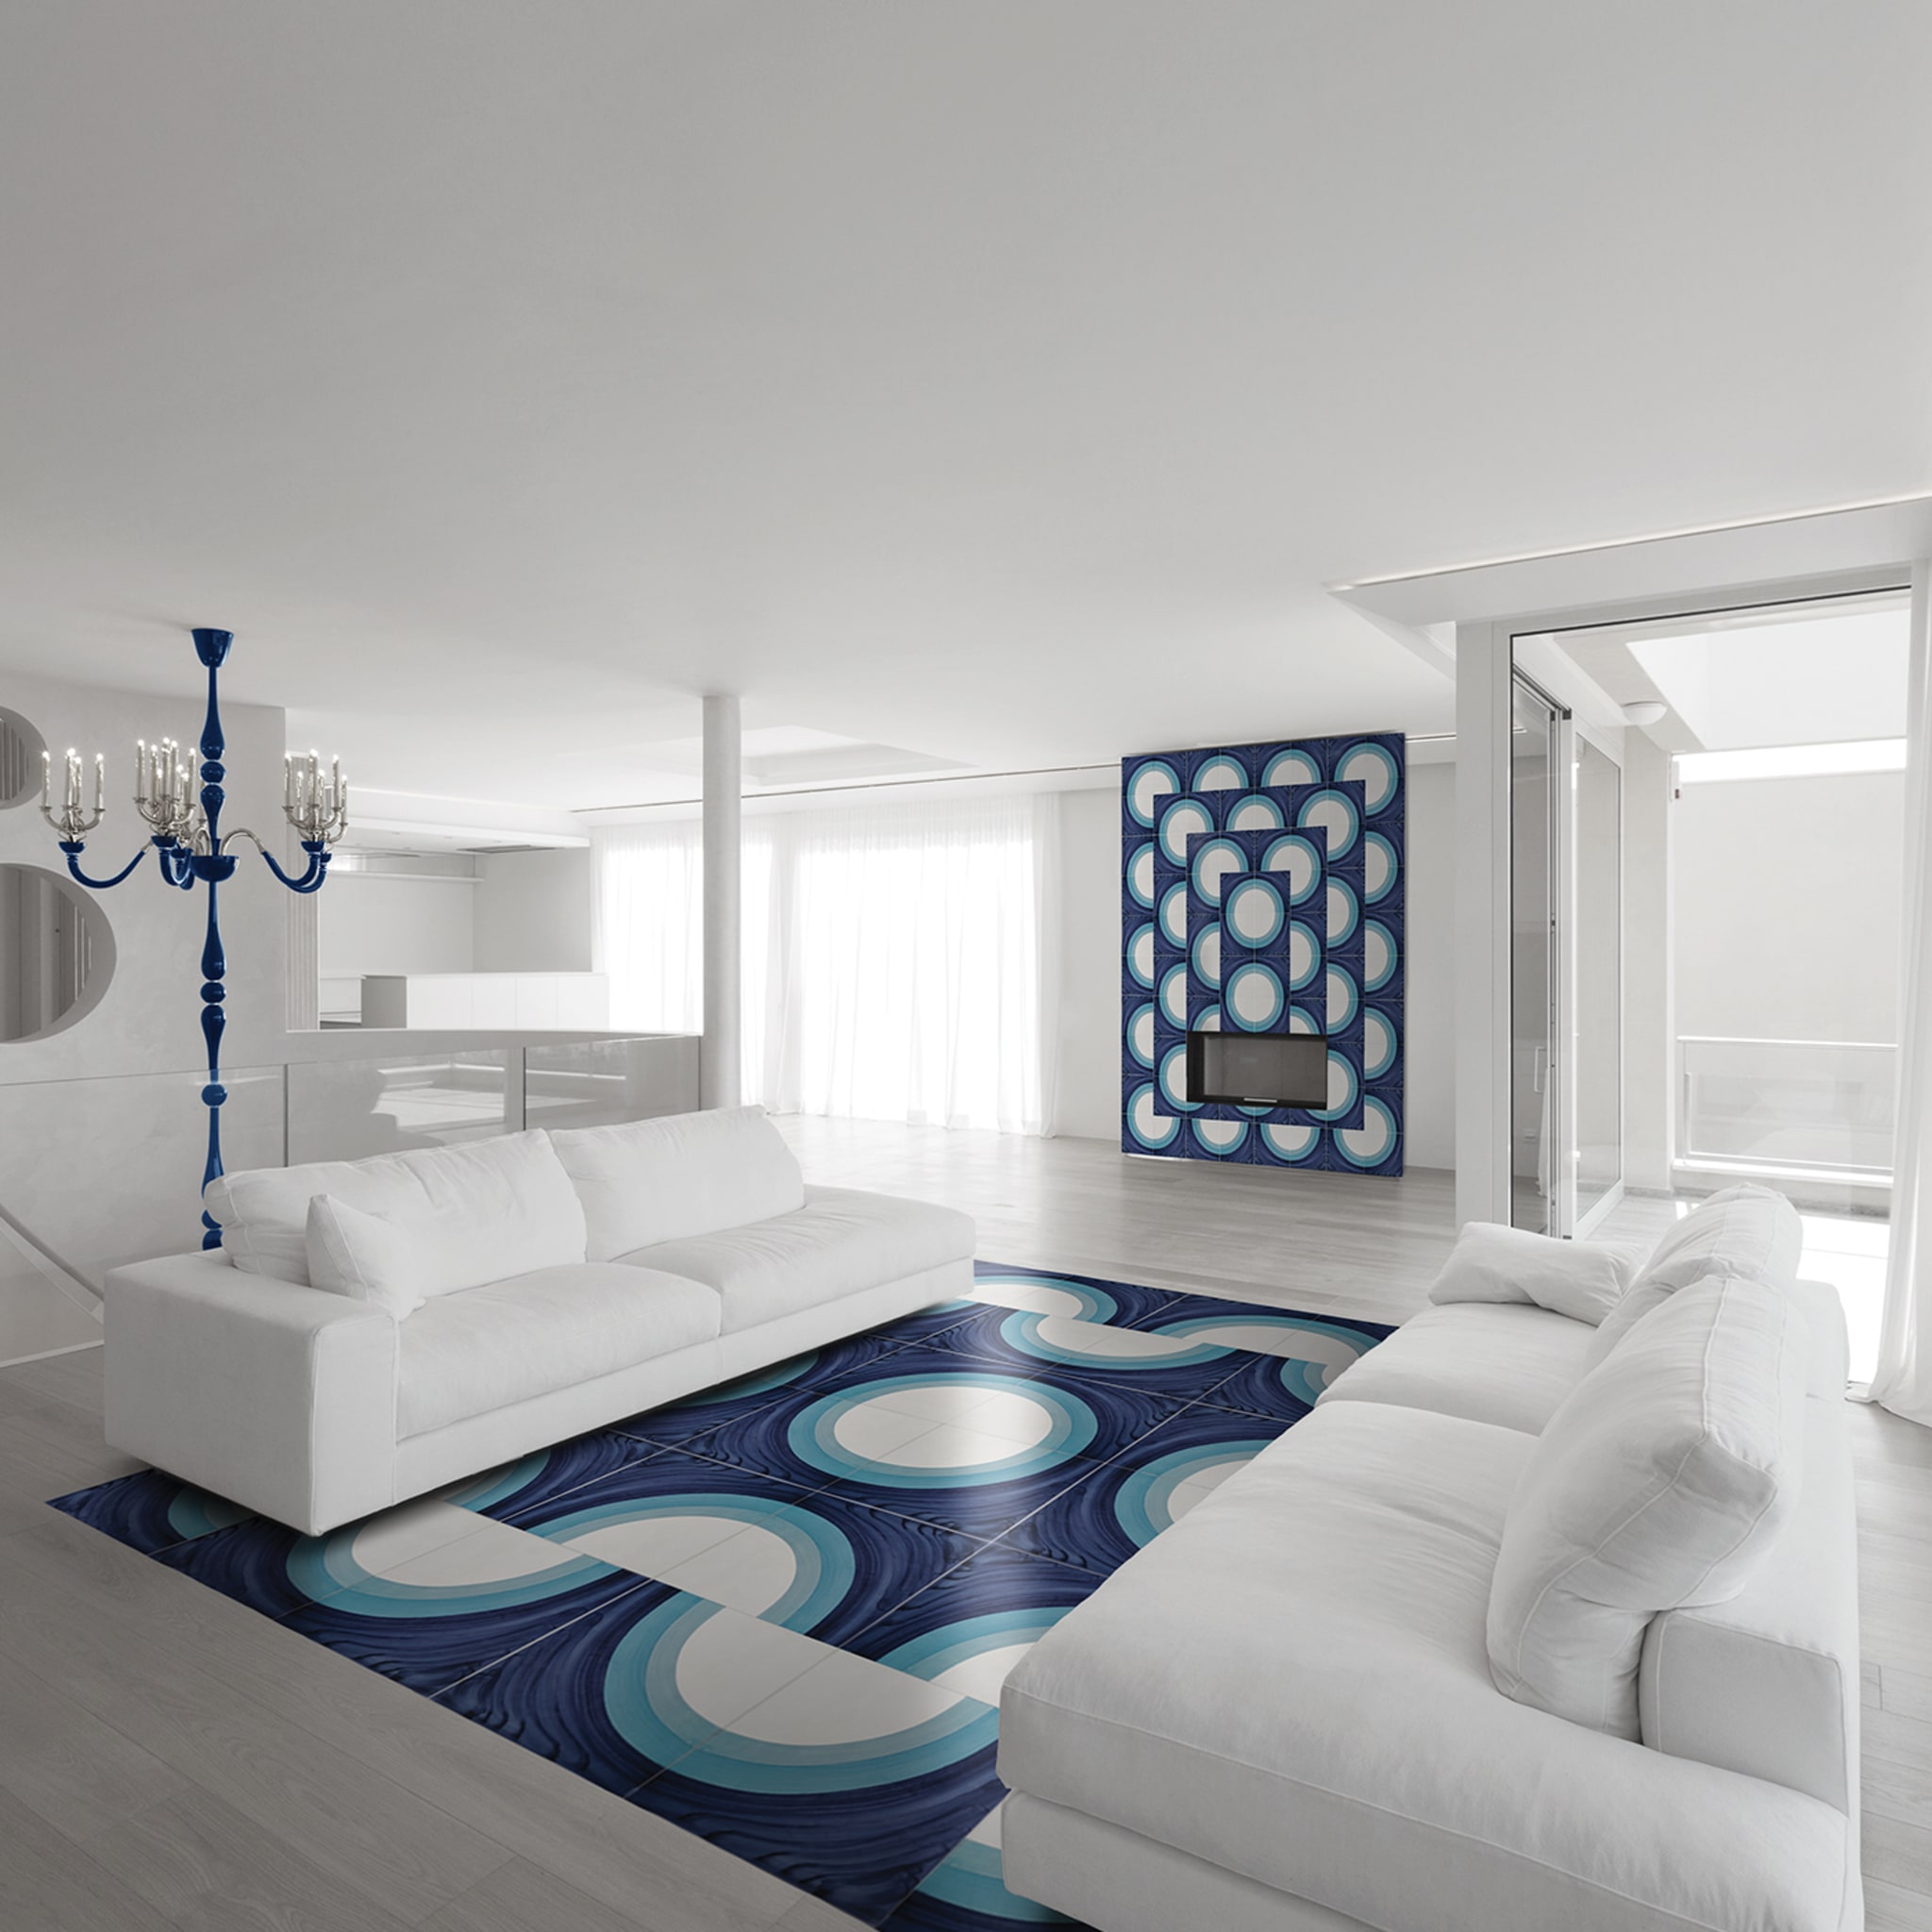 Baleno Square Blue & White Tile - Alternative view 2